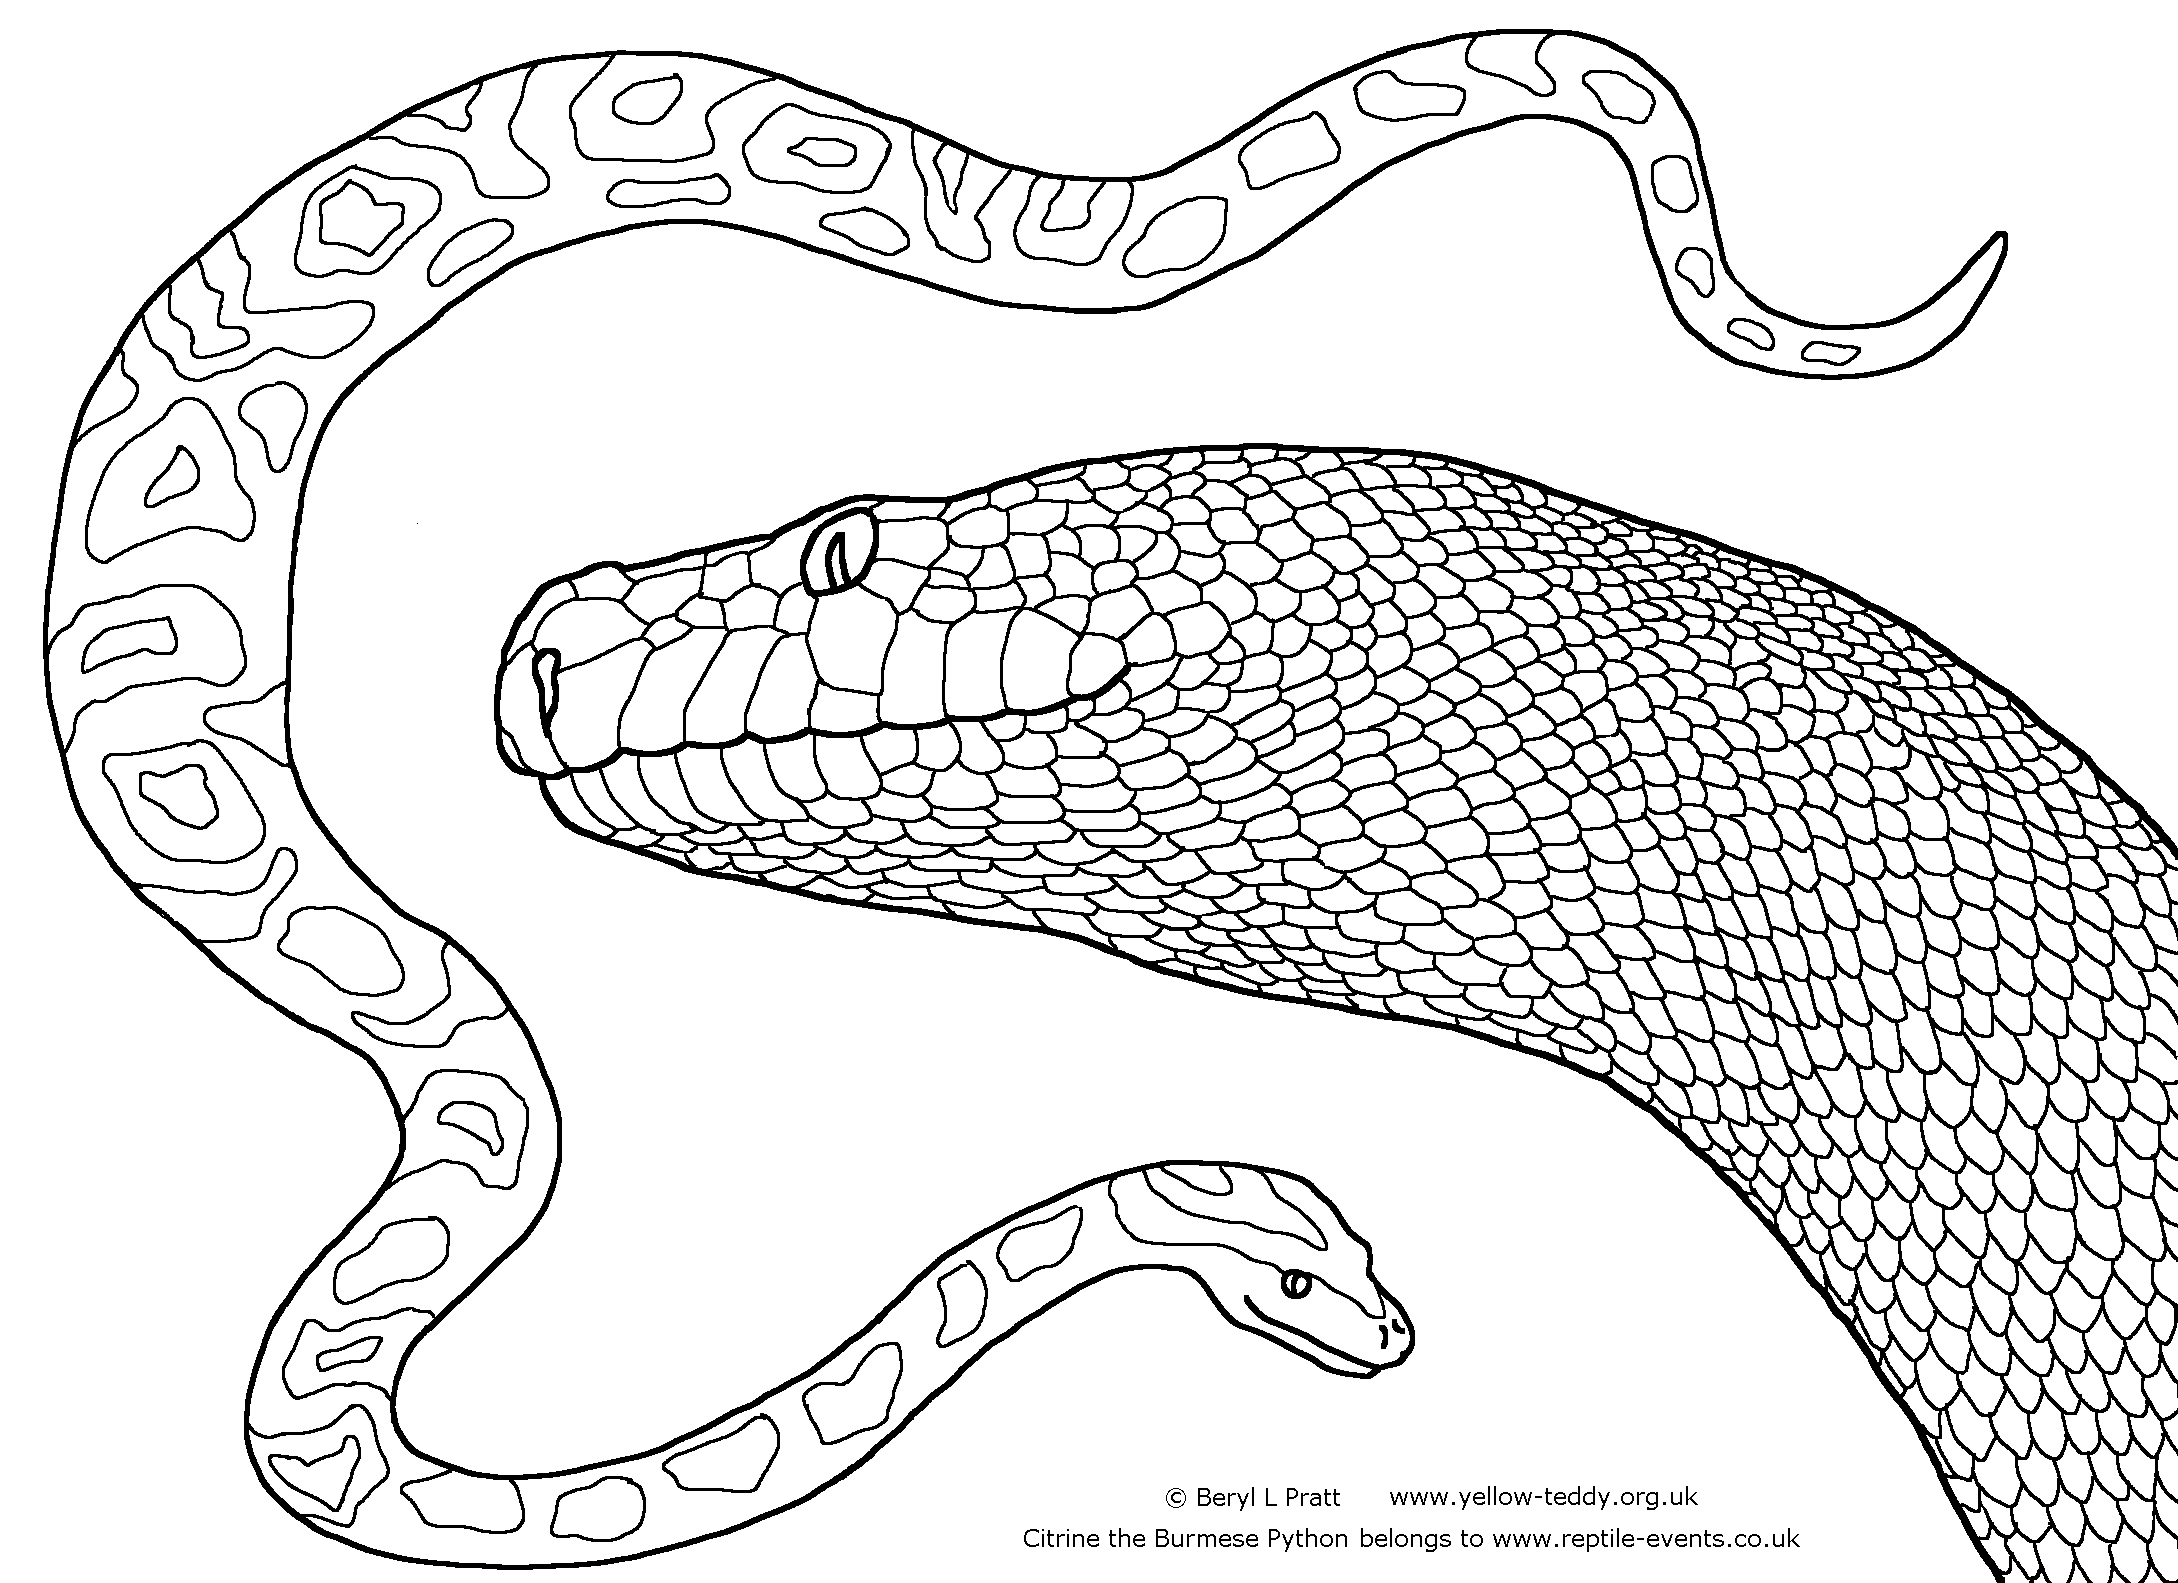 Line drawing of Citrine the Burmese Python